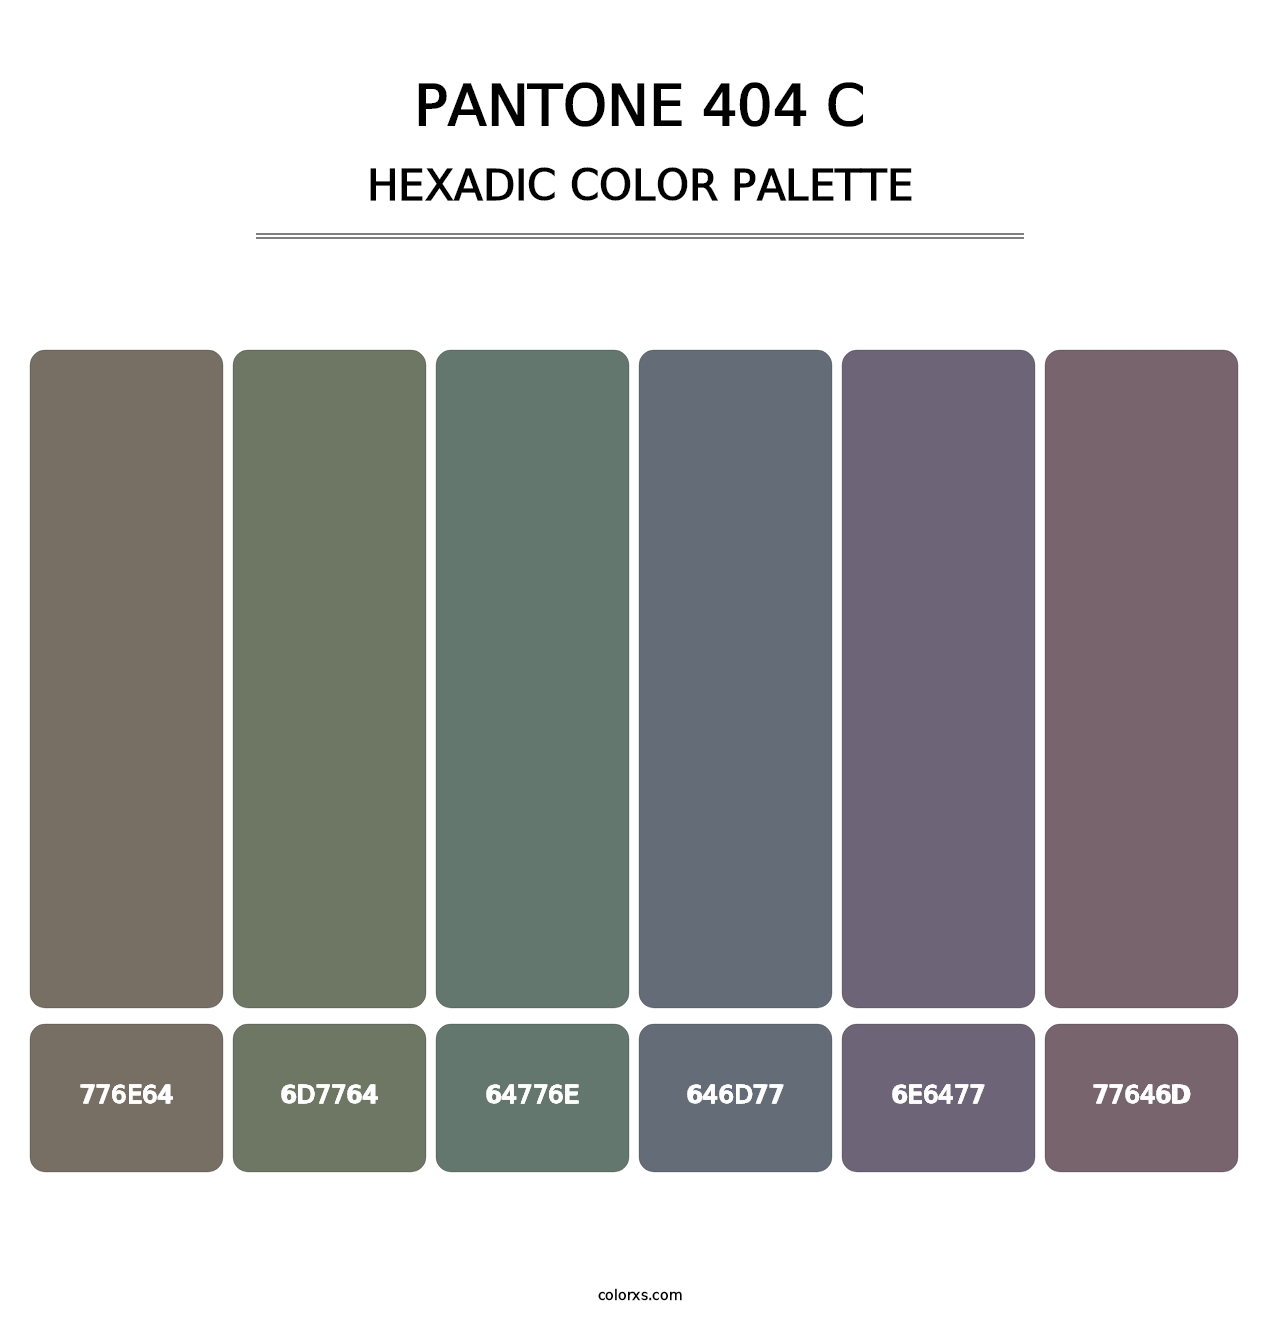 PANTONE 404 C - Hexadic Color Palette